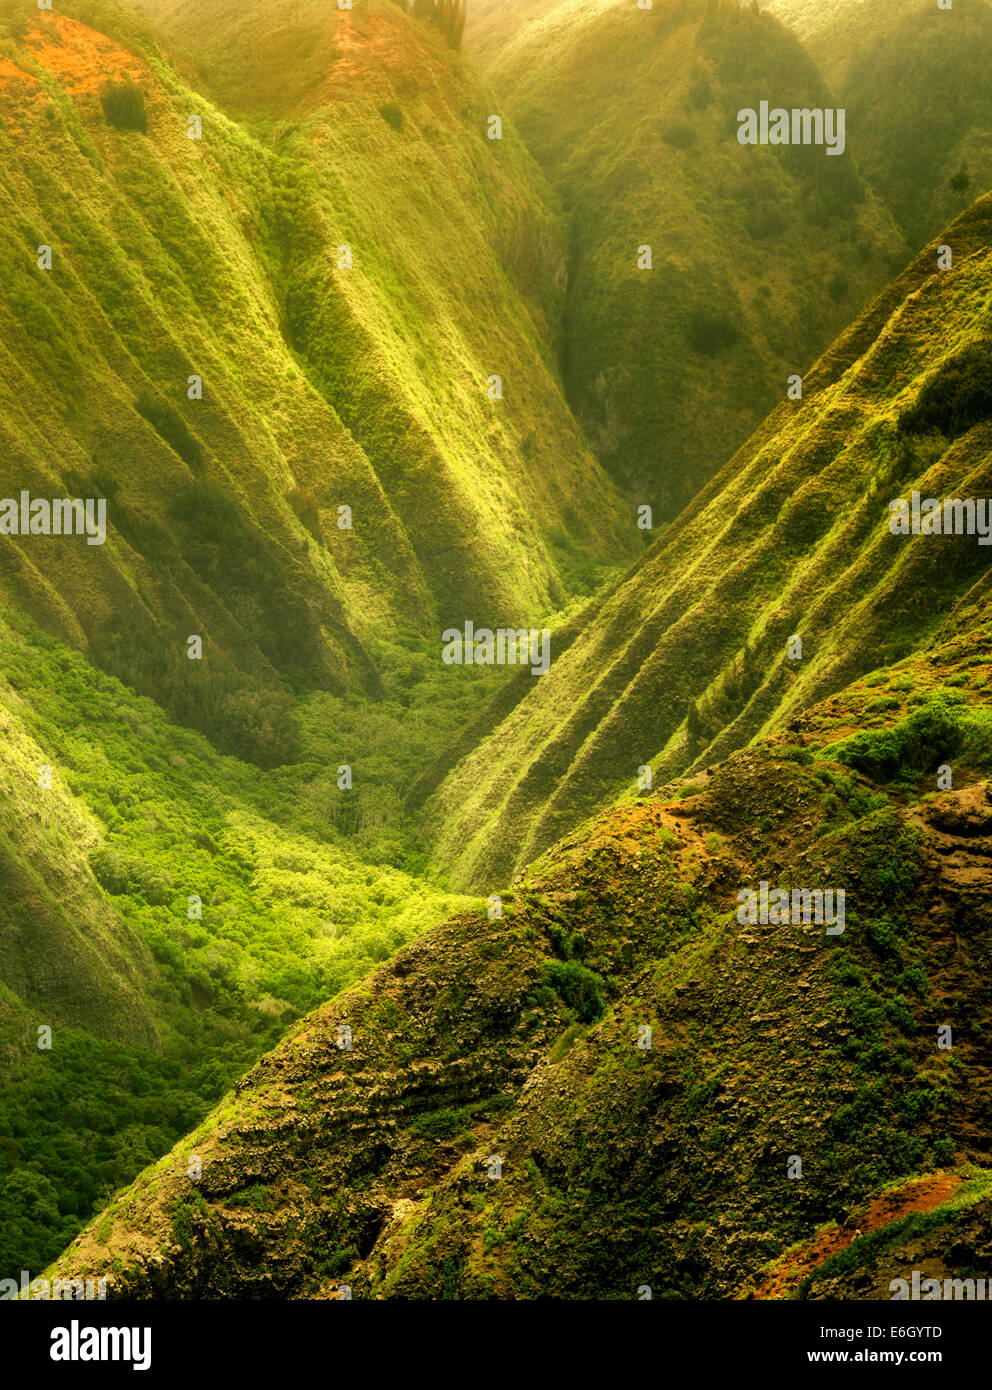 Maunalei Valley with dappled light. Lanai, Hawaii. Stock Photo